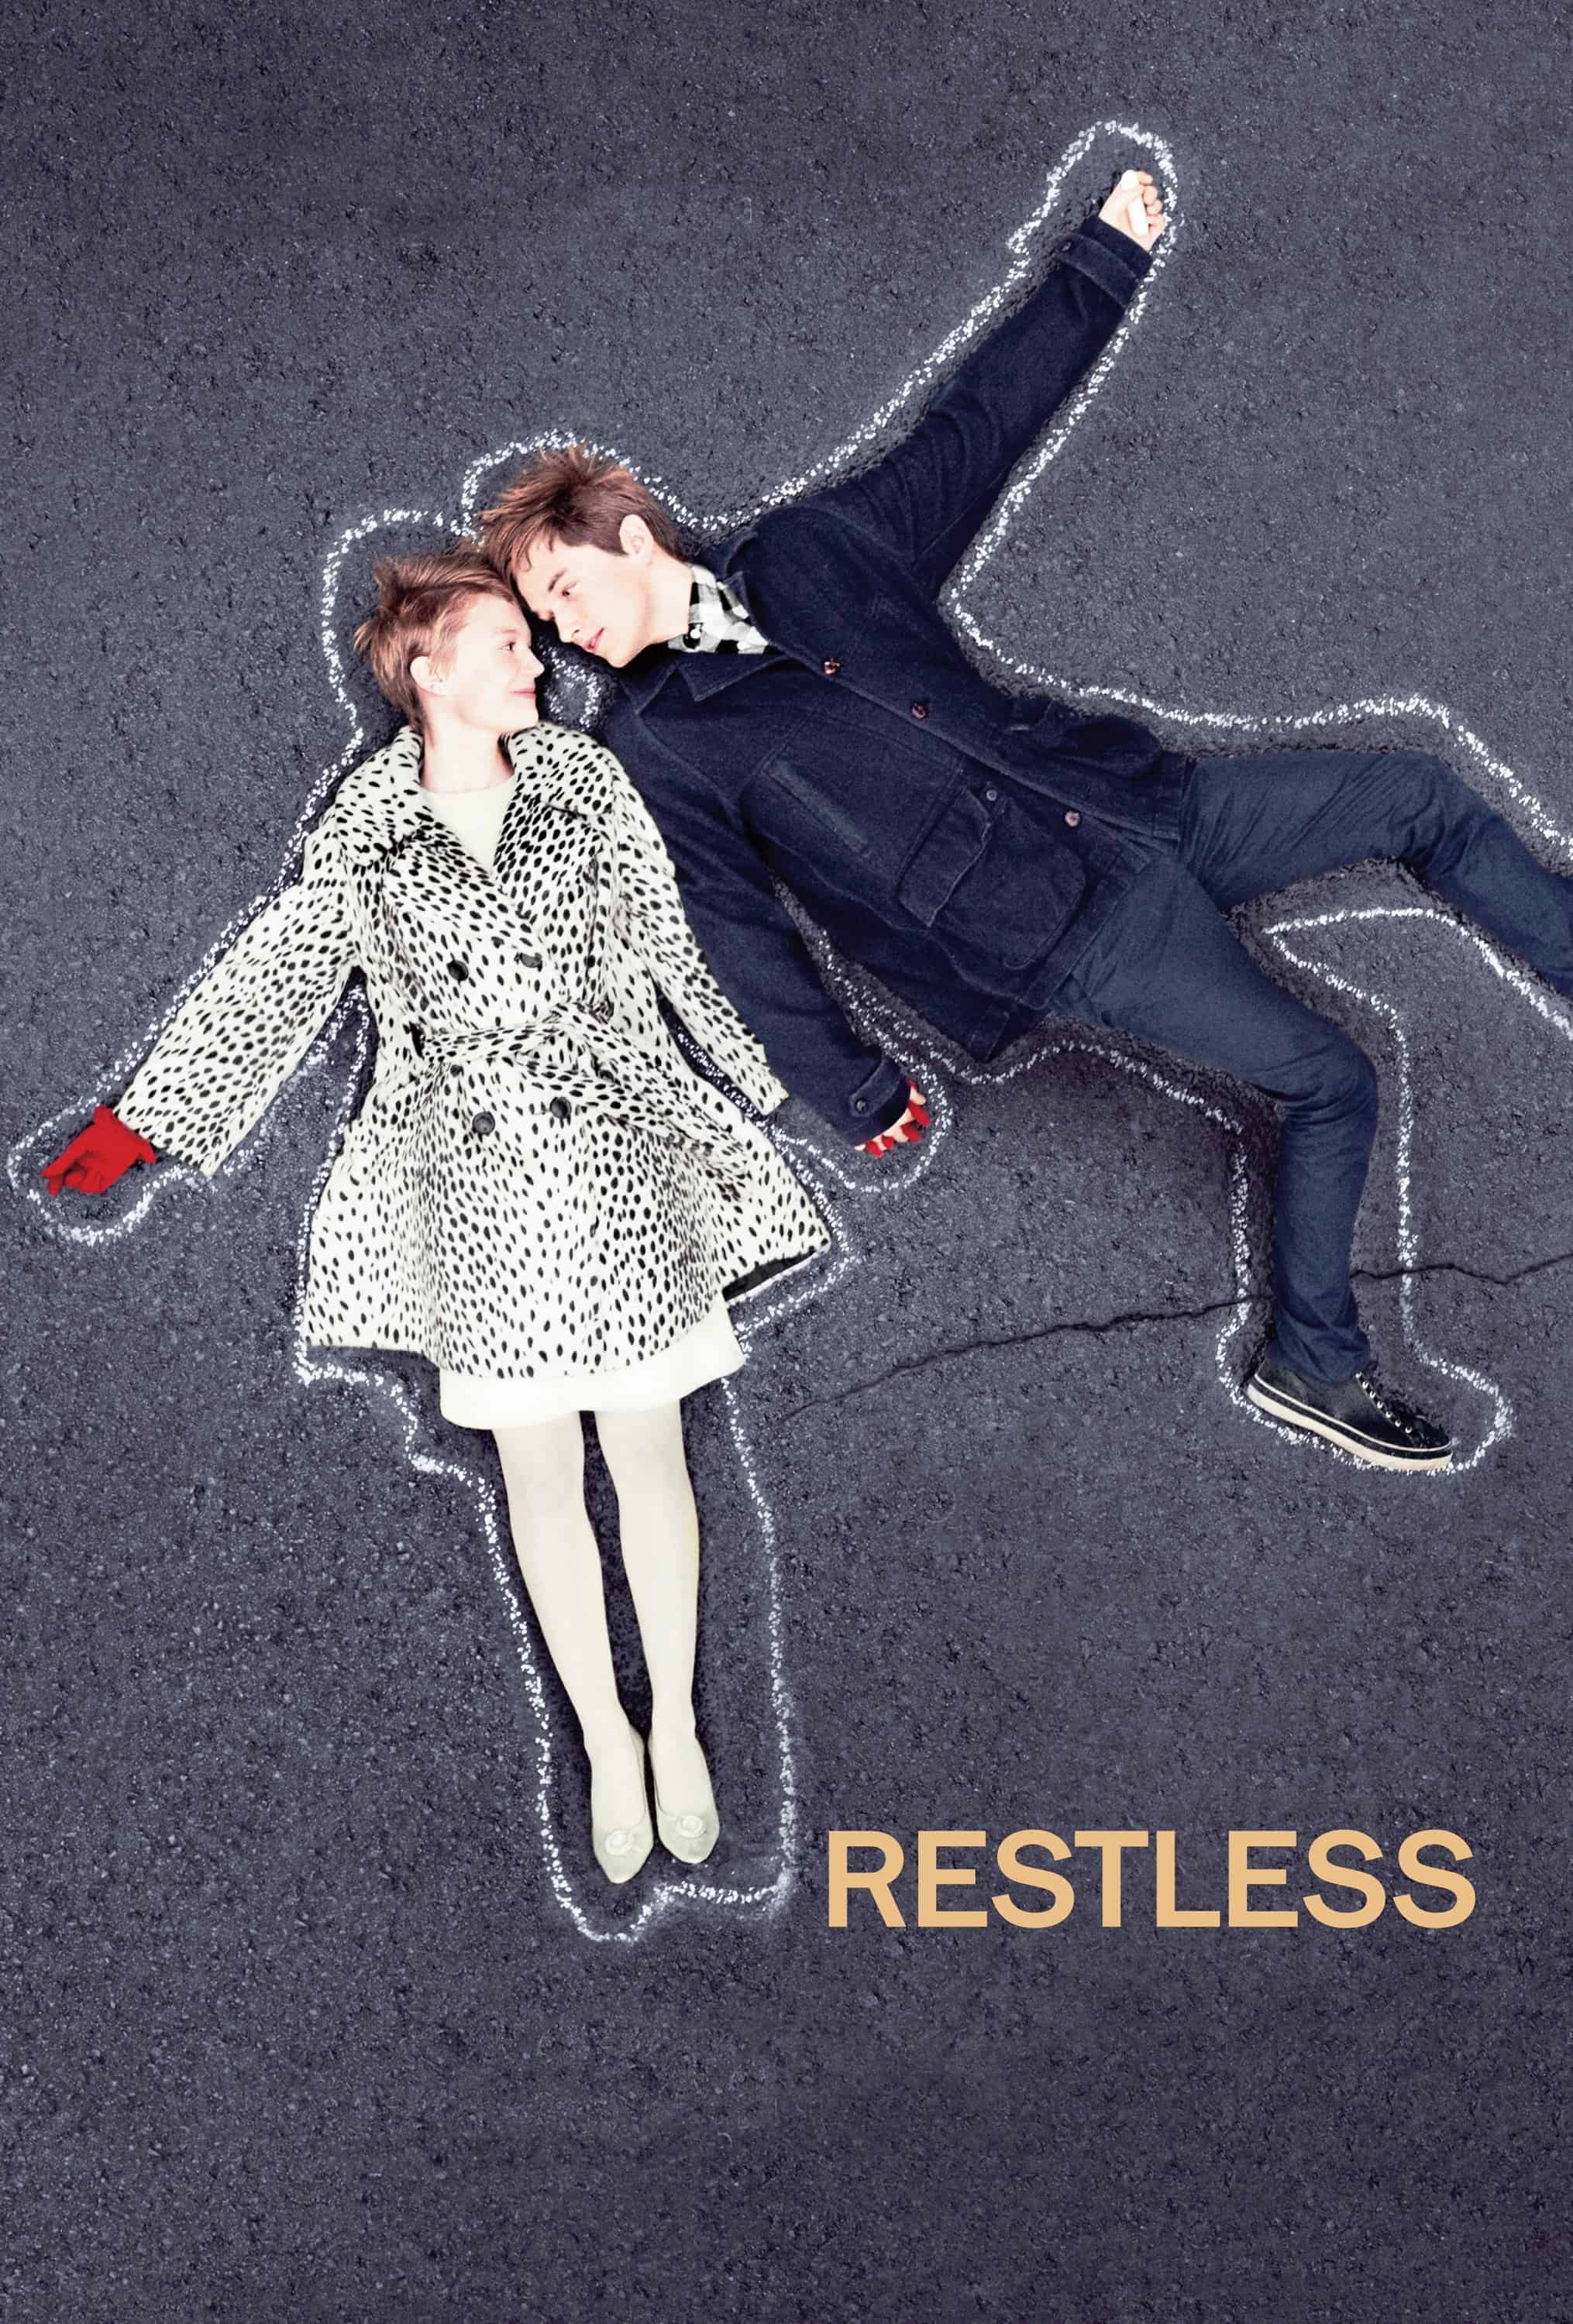 Restless, 2011 